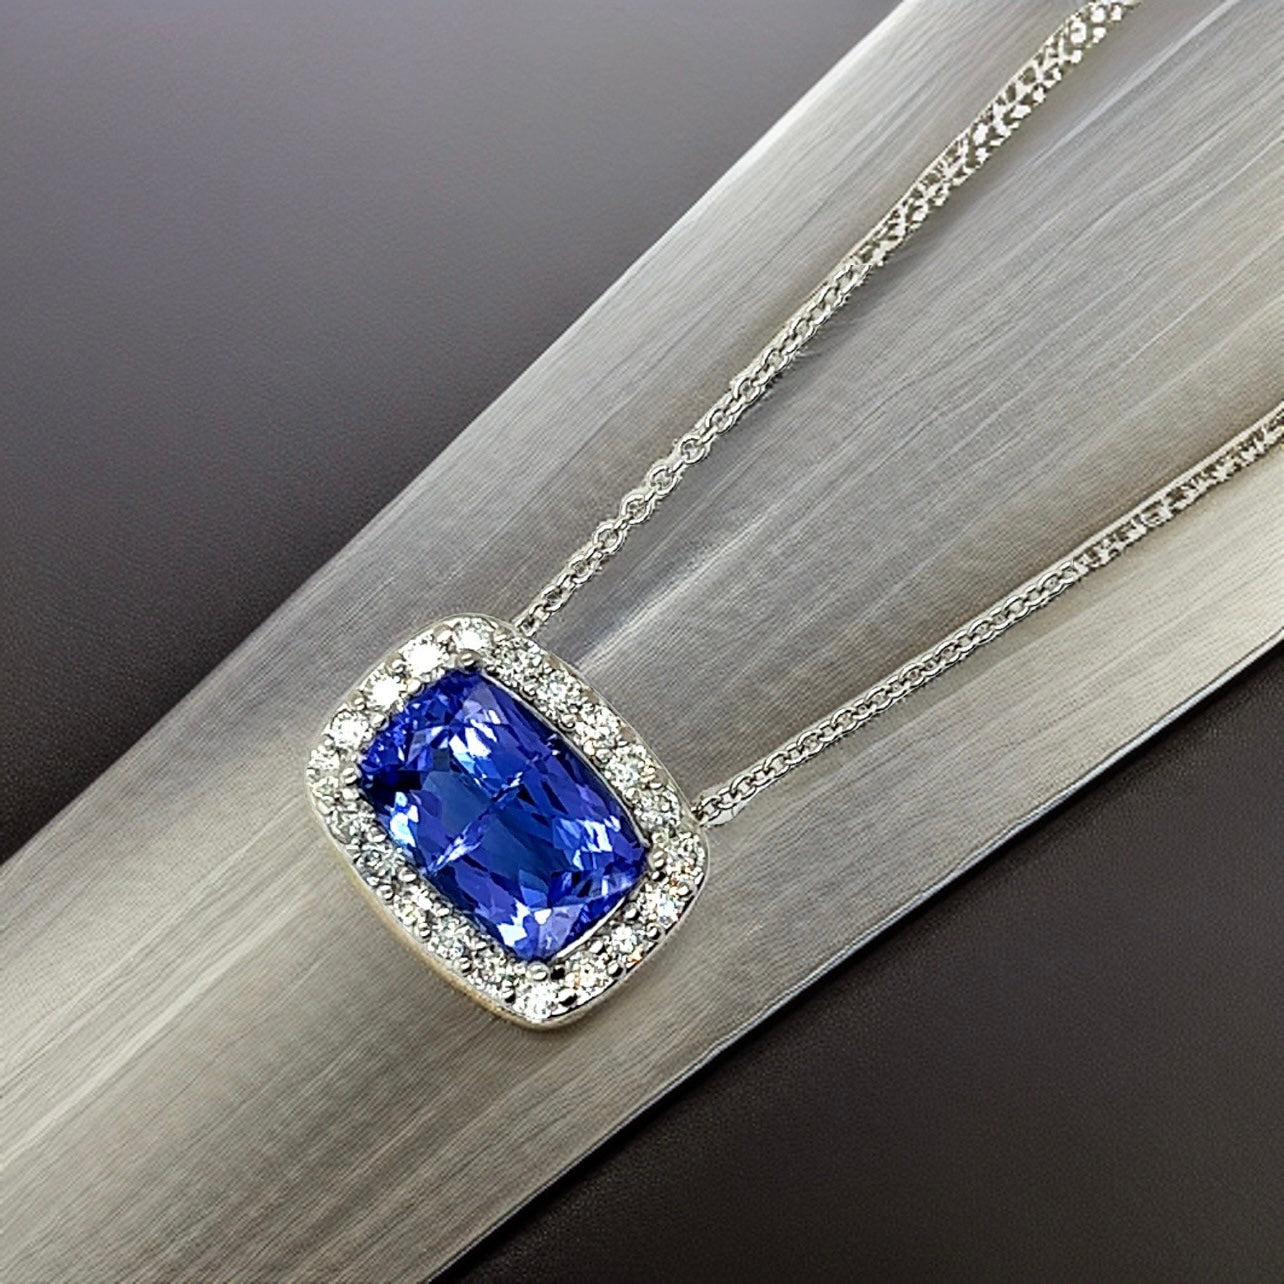 Natural Tanzanite Diamond Pendant Necklace 18" 14k W Gold 4.85 TCW Certified $5,975 215434 - Certified Fine Jewelry